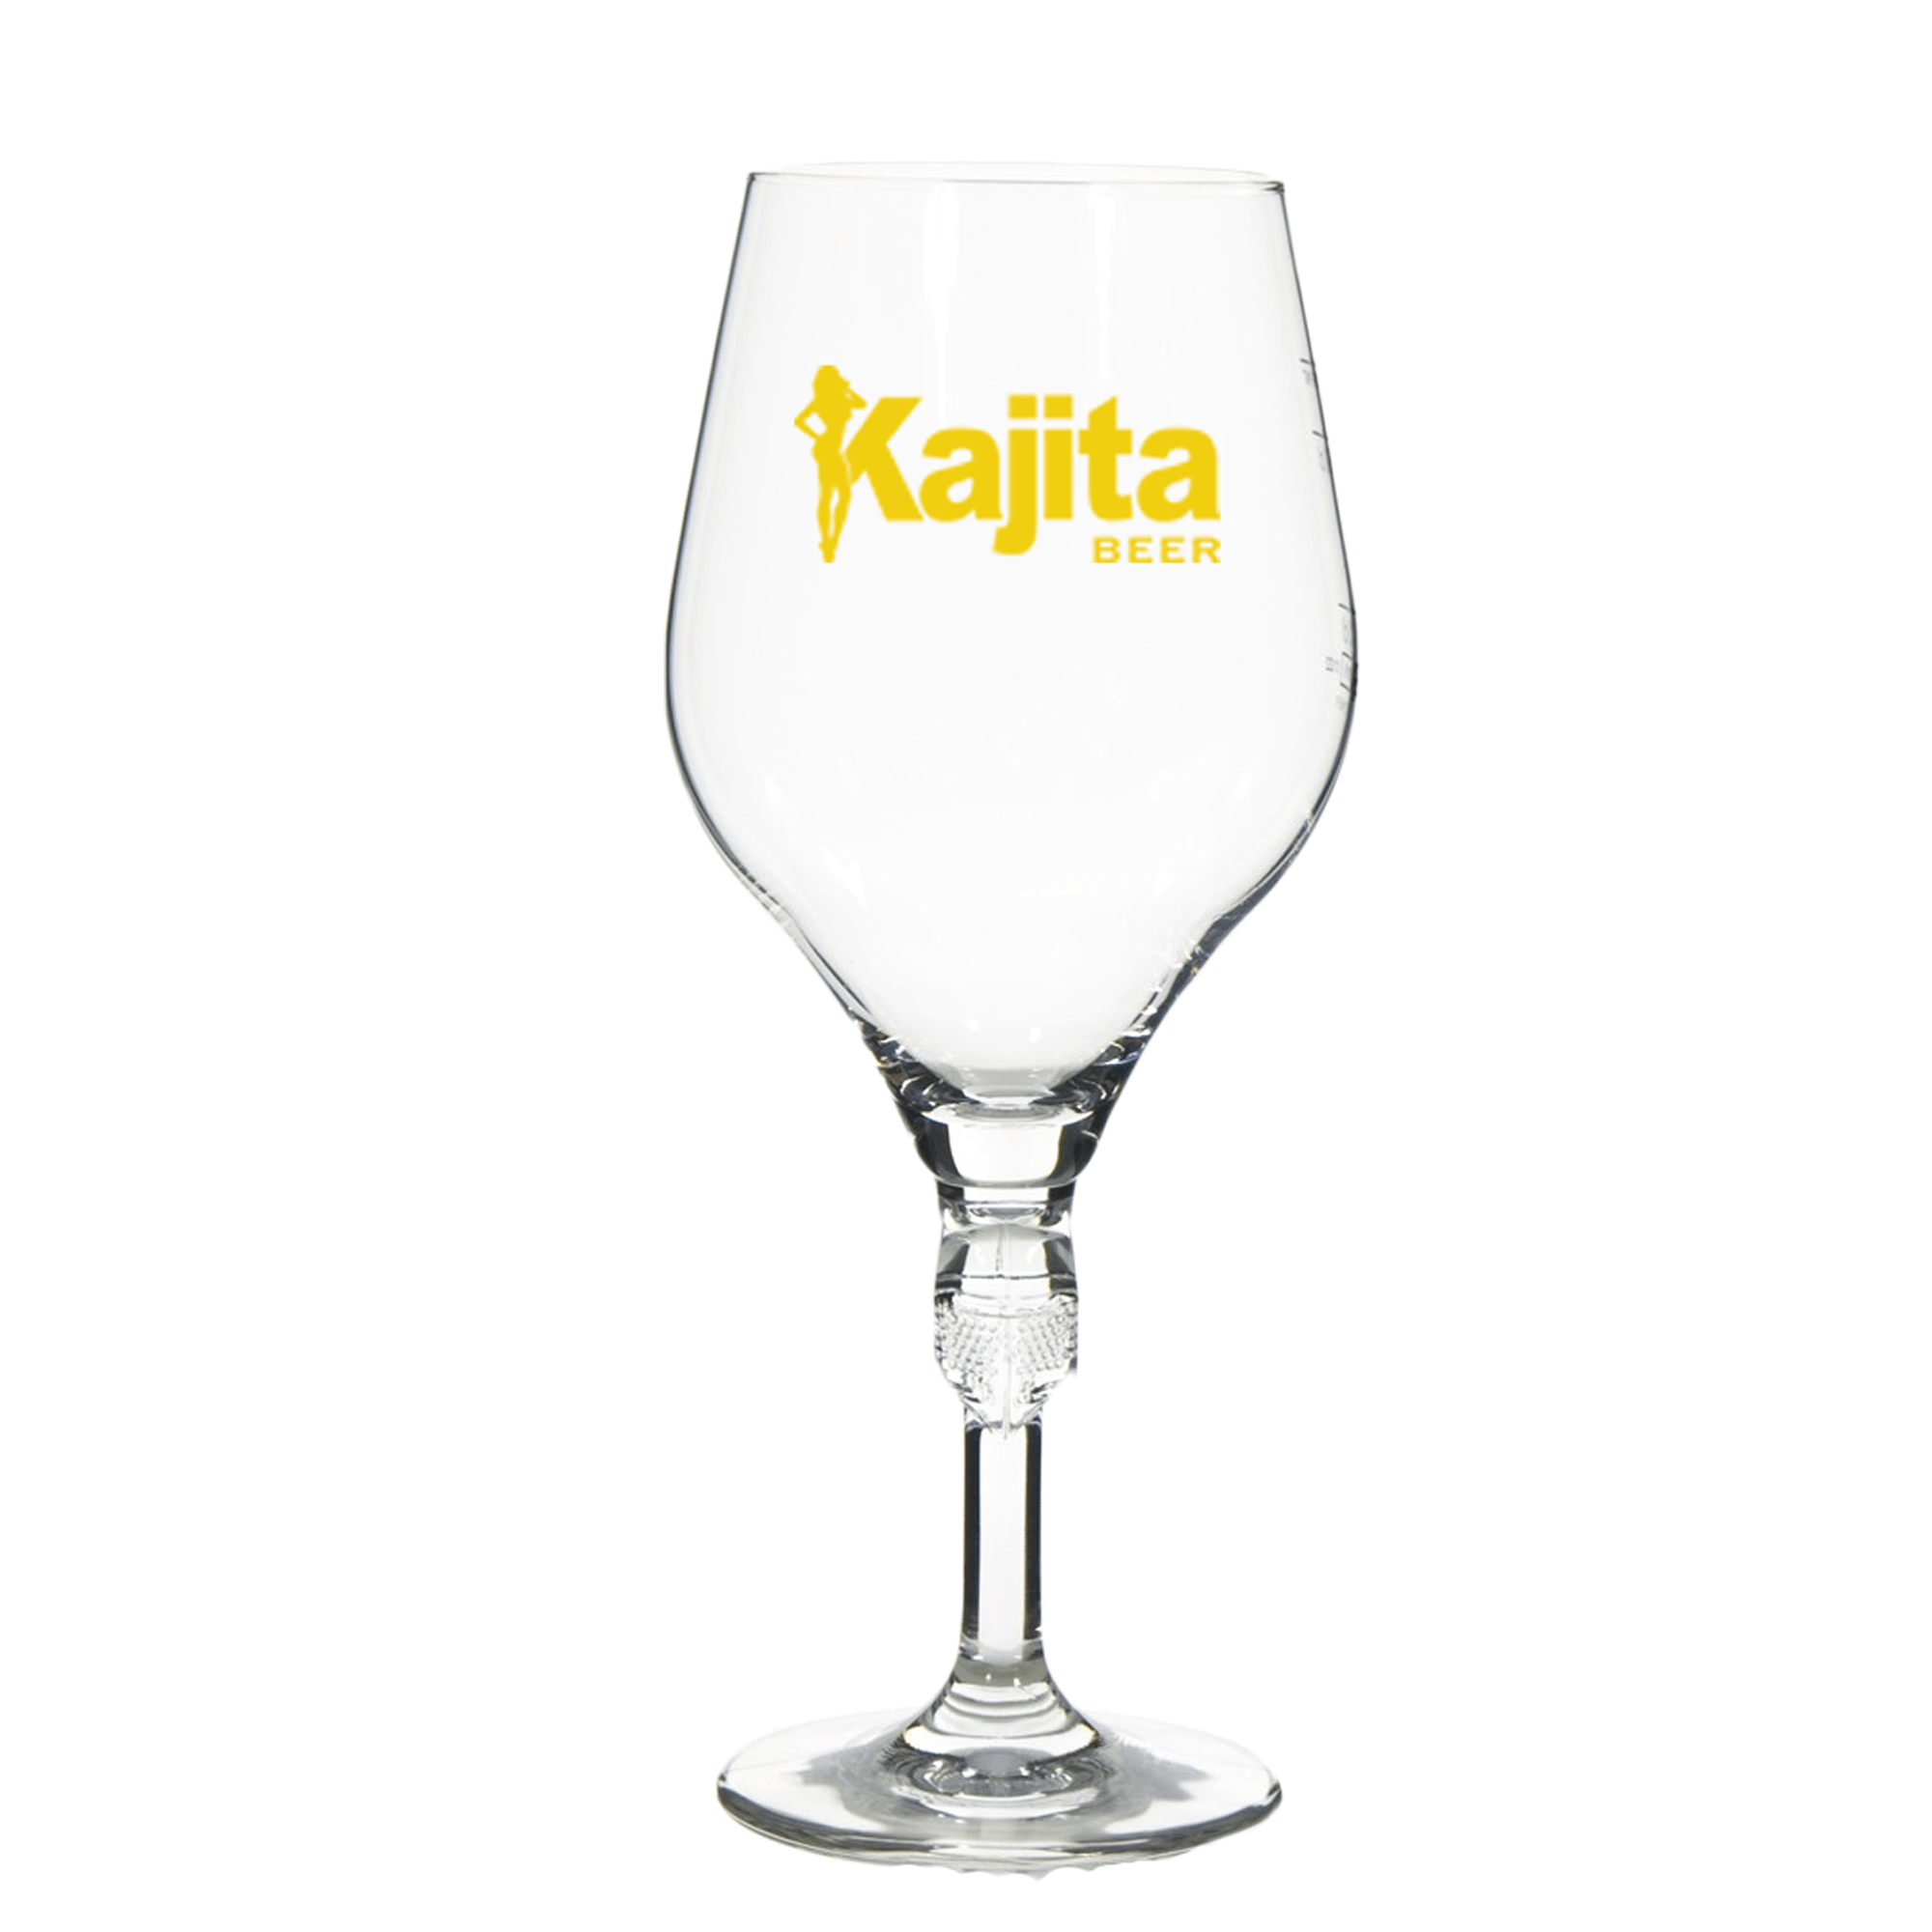 Kajita Beer glas